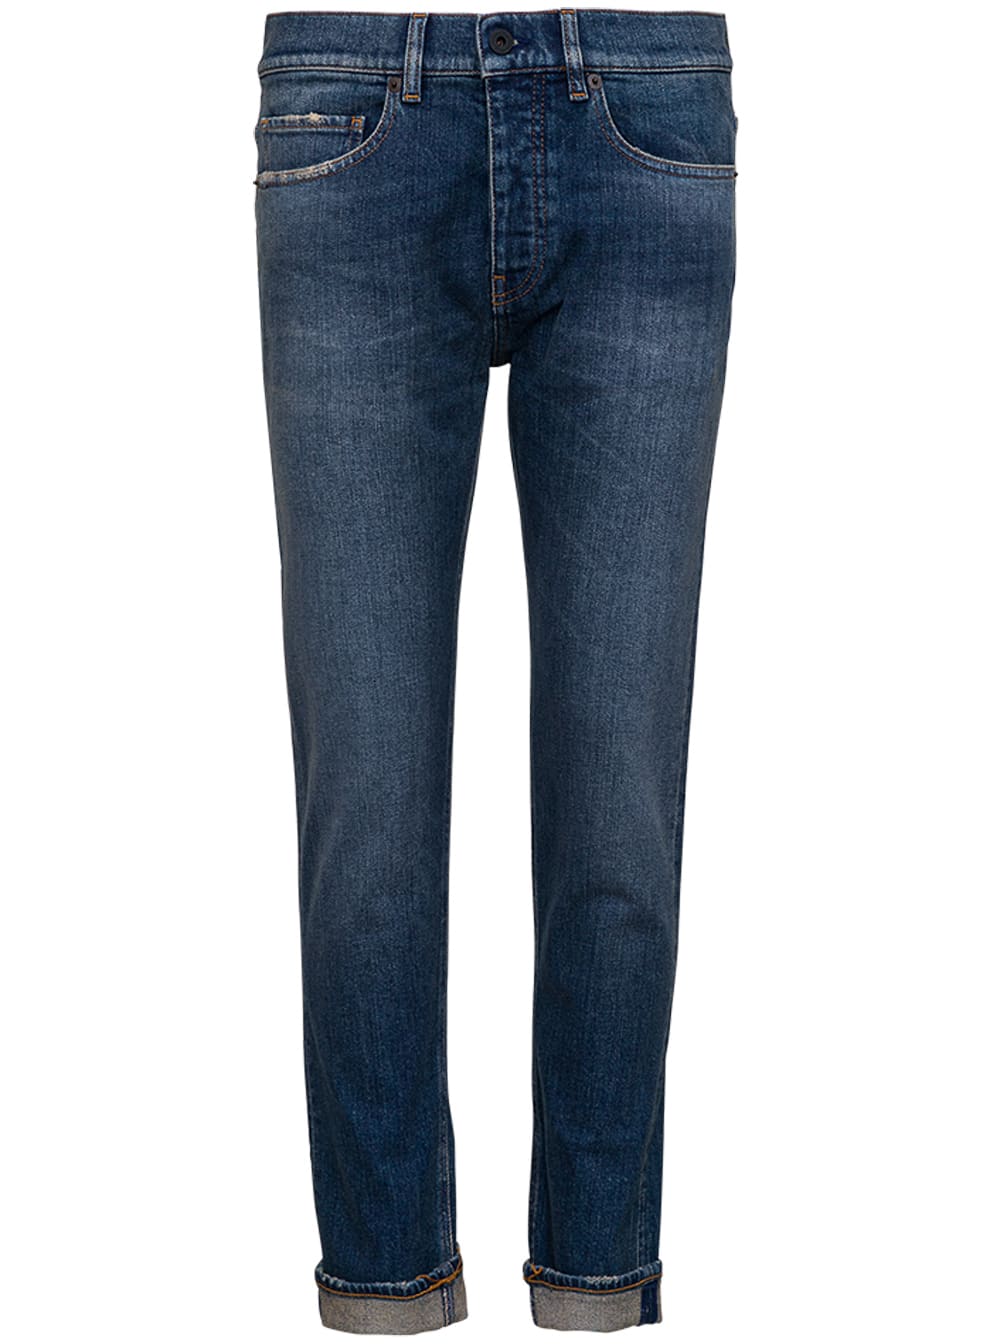 Pence Five Pockets Denim Jeans